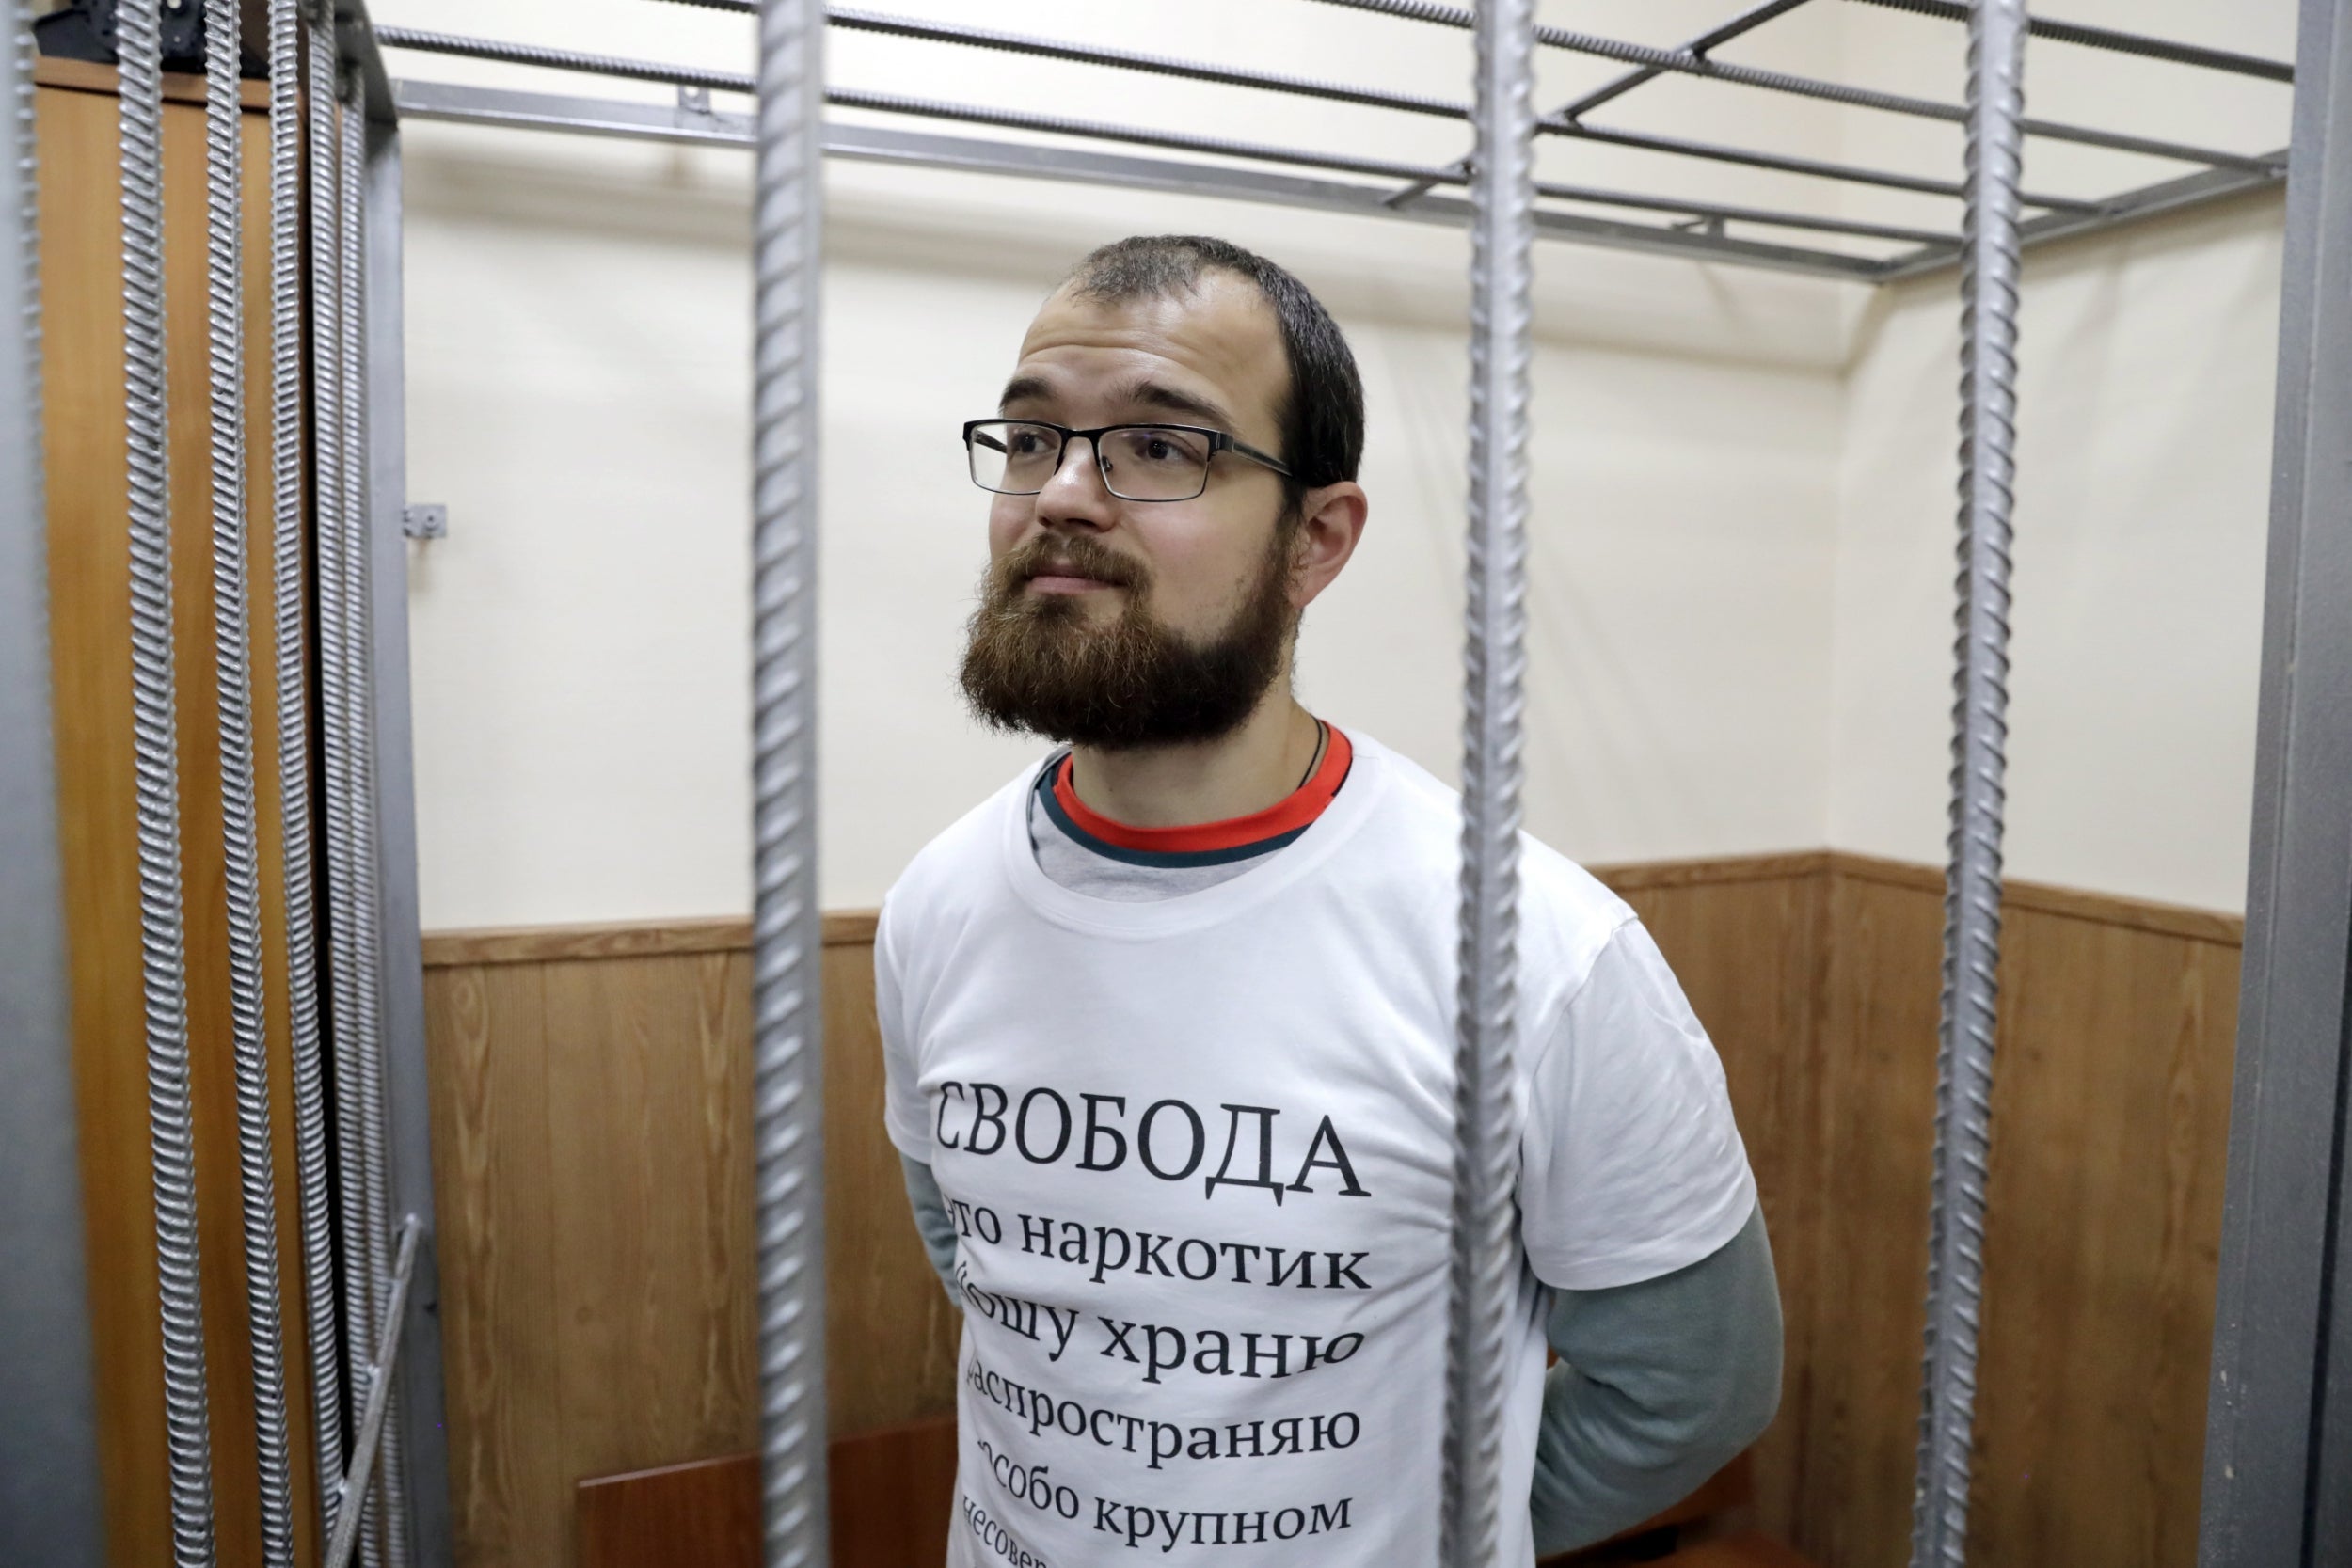 Authorities dropped charges against activists Alexei Minyailo following public outcry